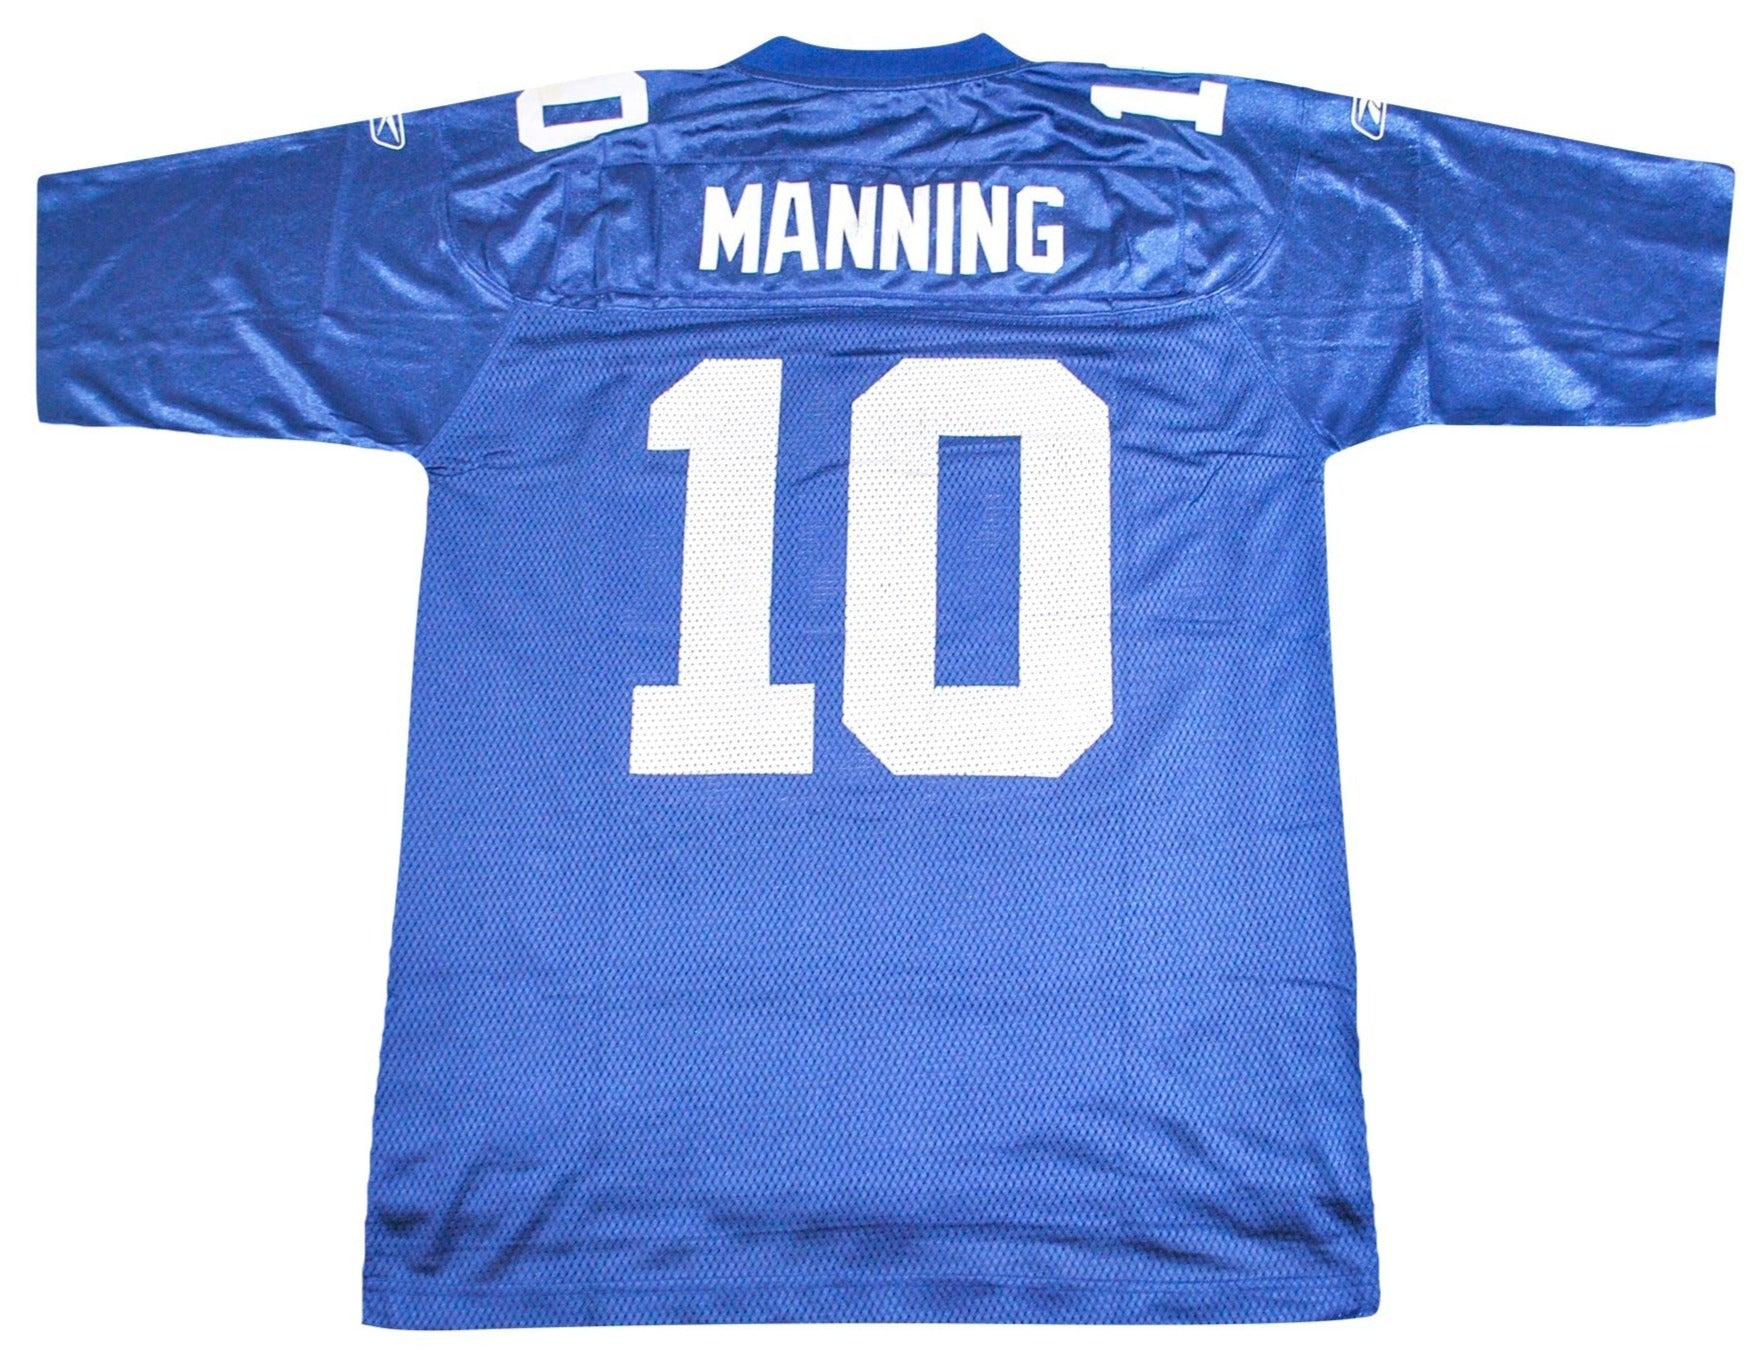 Eli Manning jersey